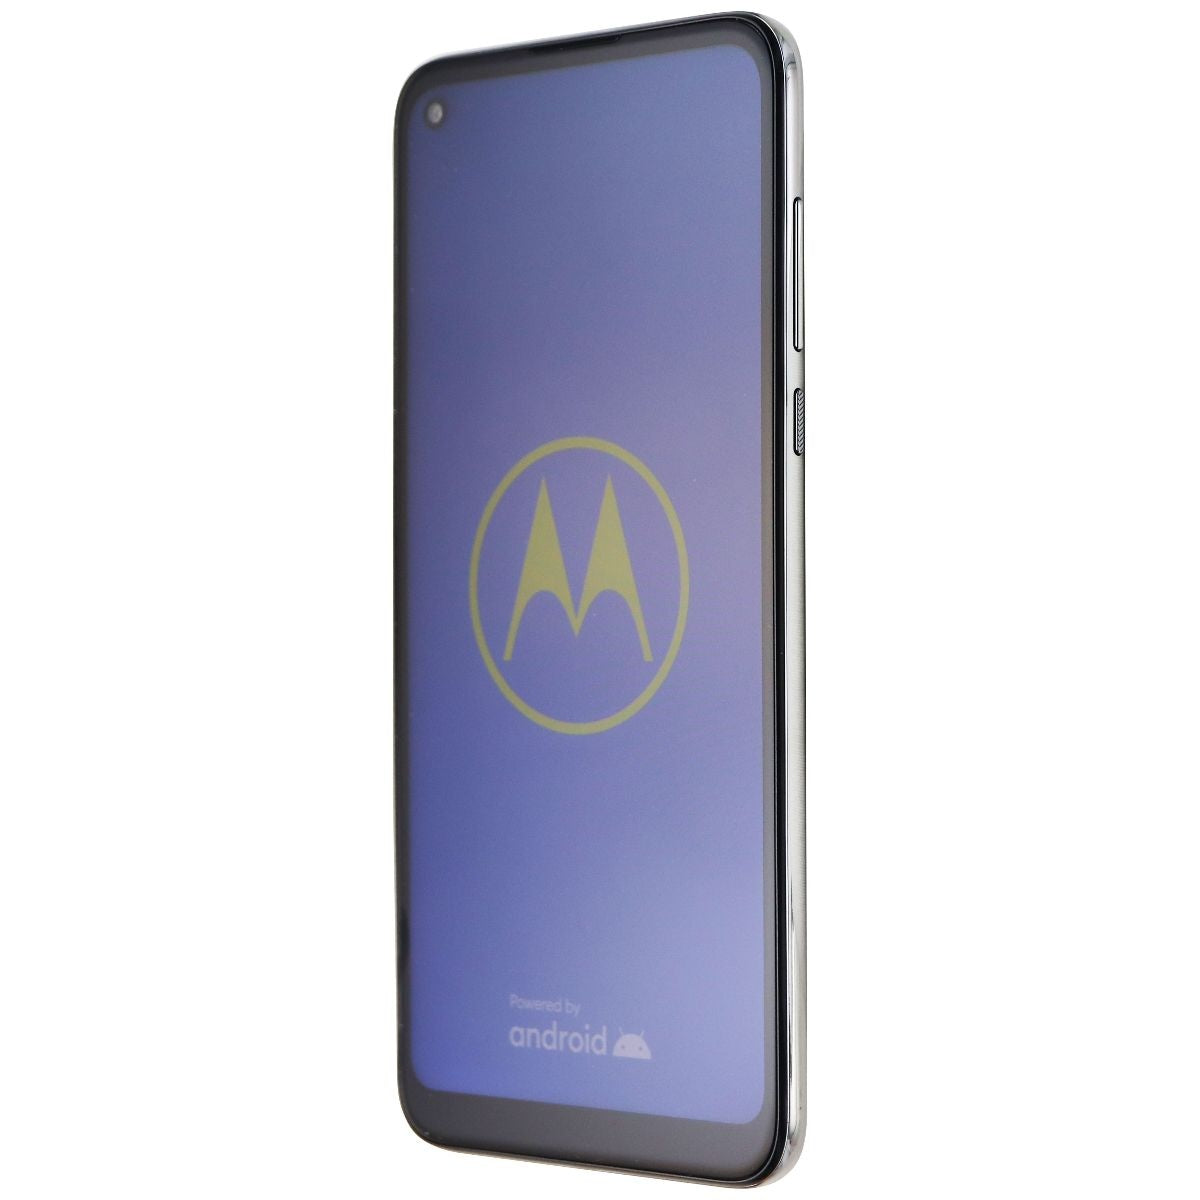 Motorola Moto G Fast (6.4-in) (XT2045-3) Unlocked - 32GB / Pearl White Cell Phones & Smartphones Motorola    - Simple Cell Bulk Wholesale Pricing - USA Seller